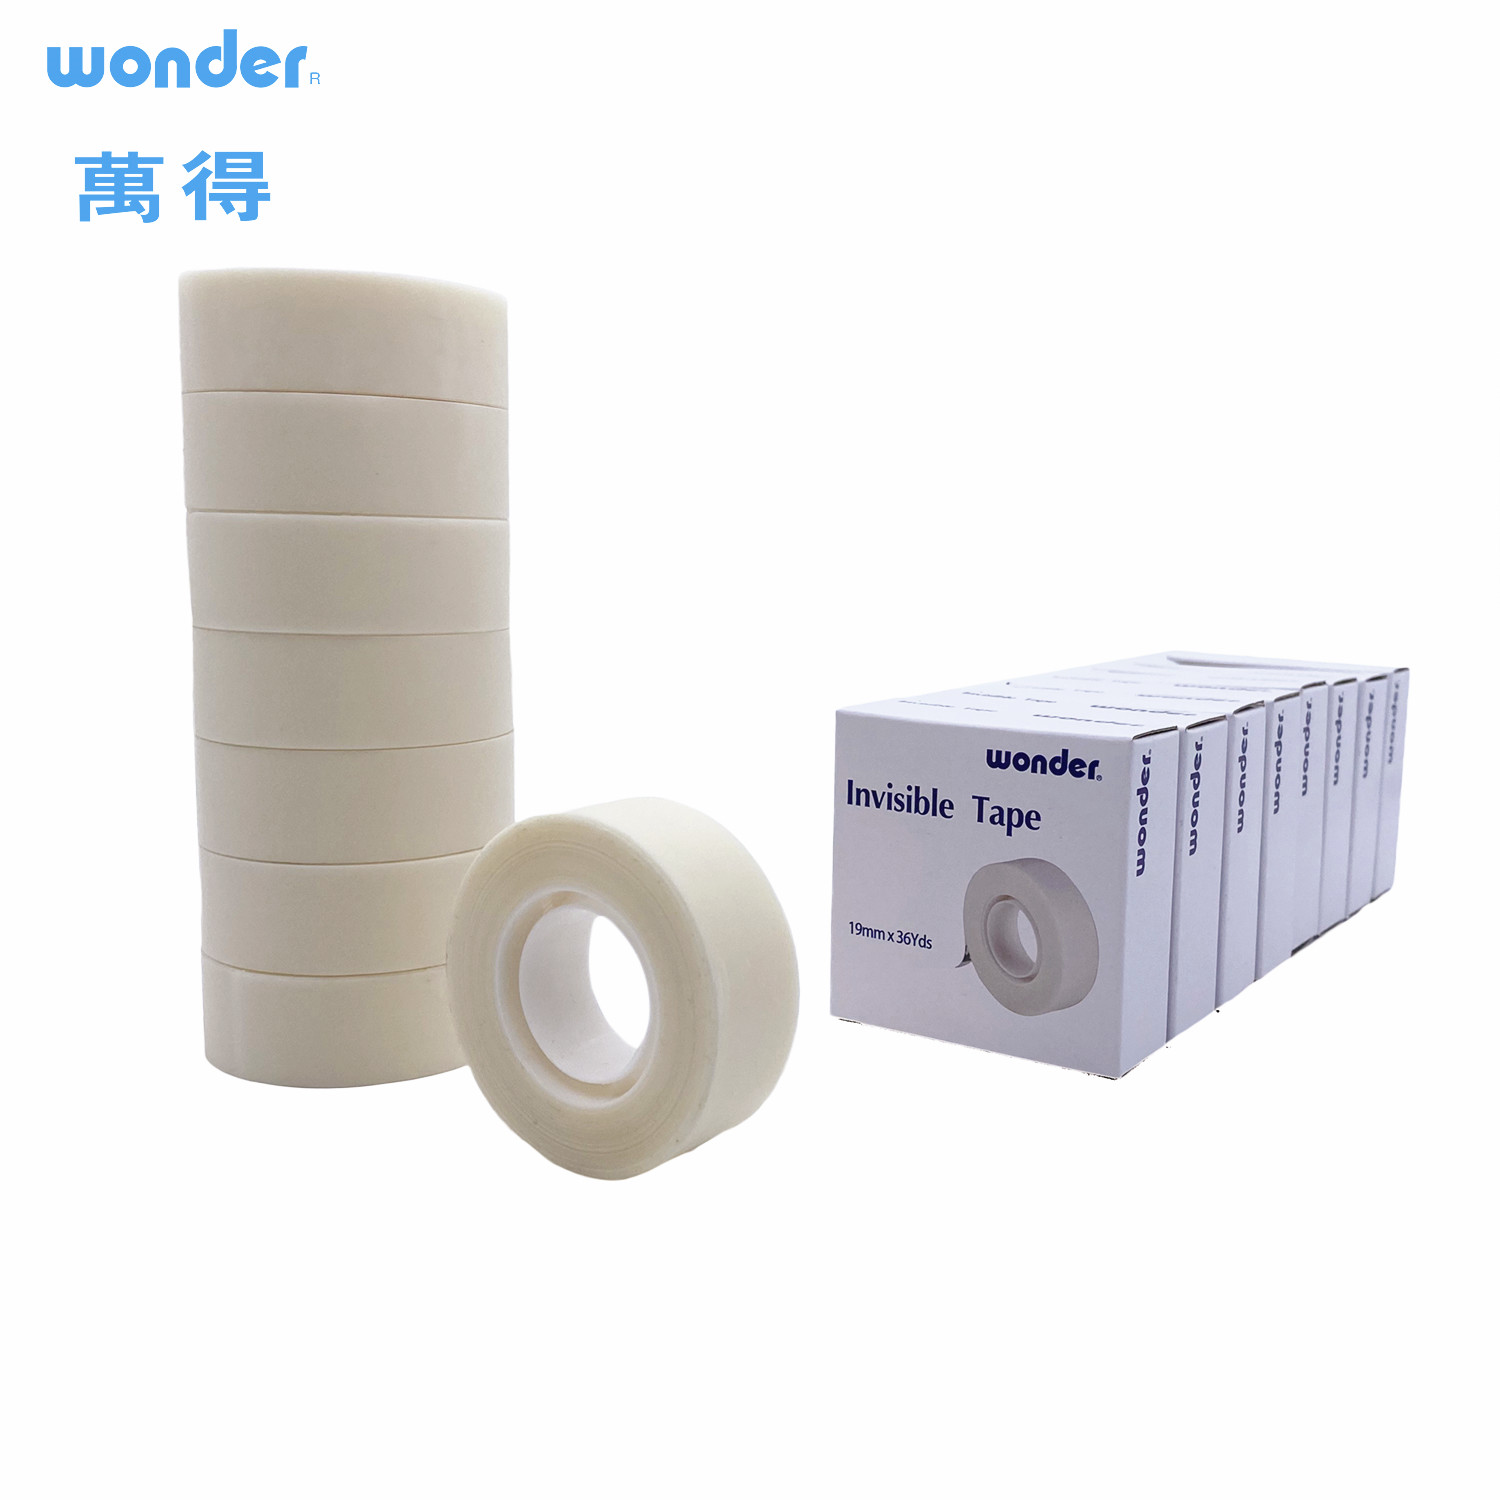 China Wonder BOPP Stationery Tape factory